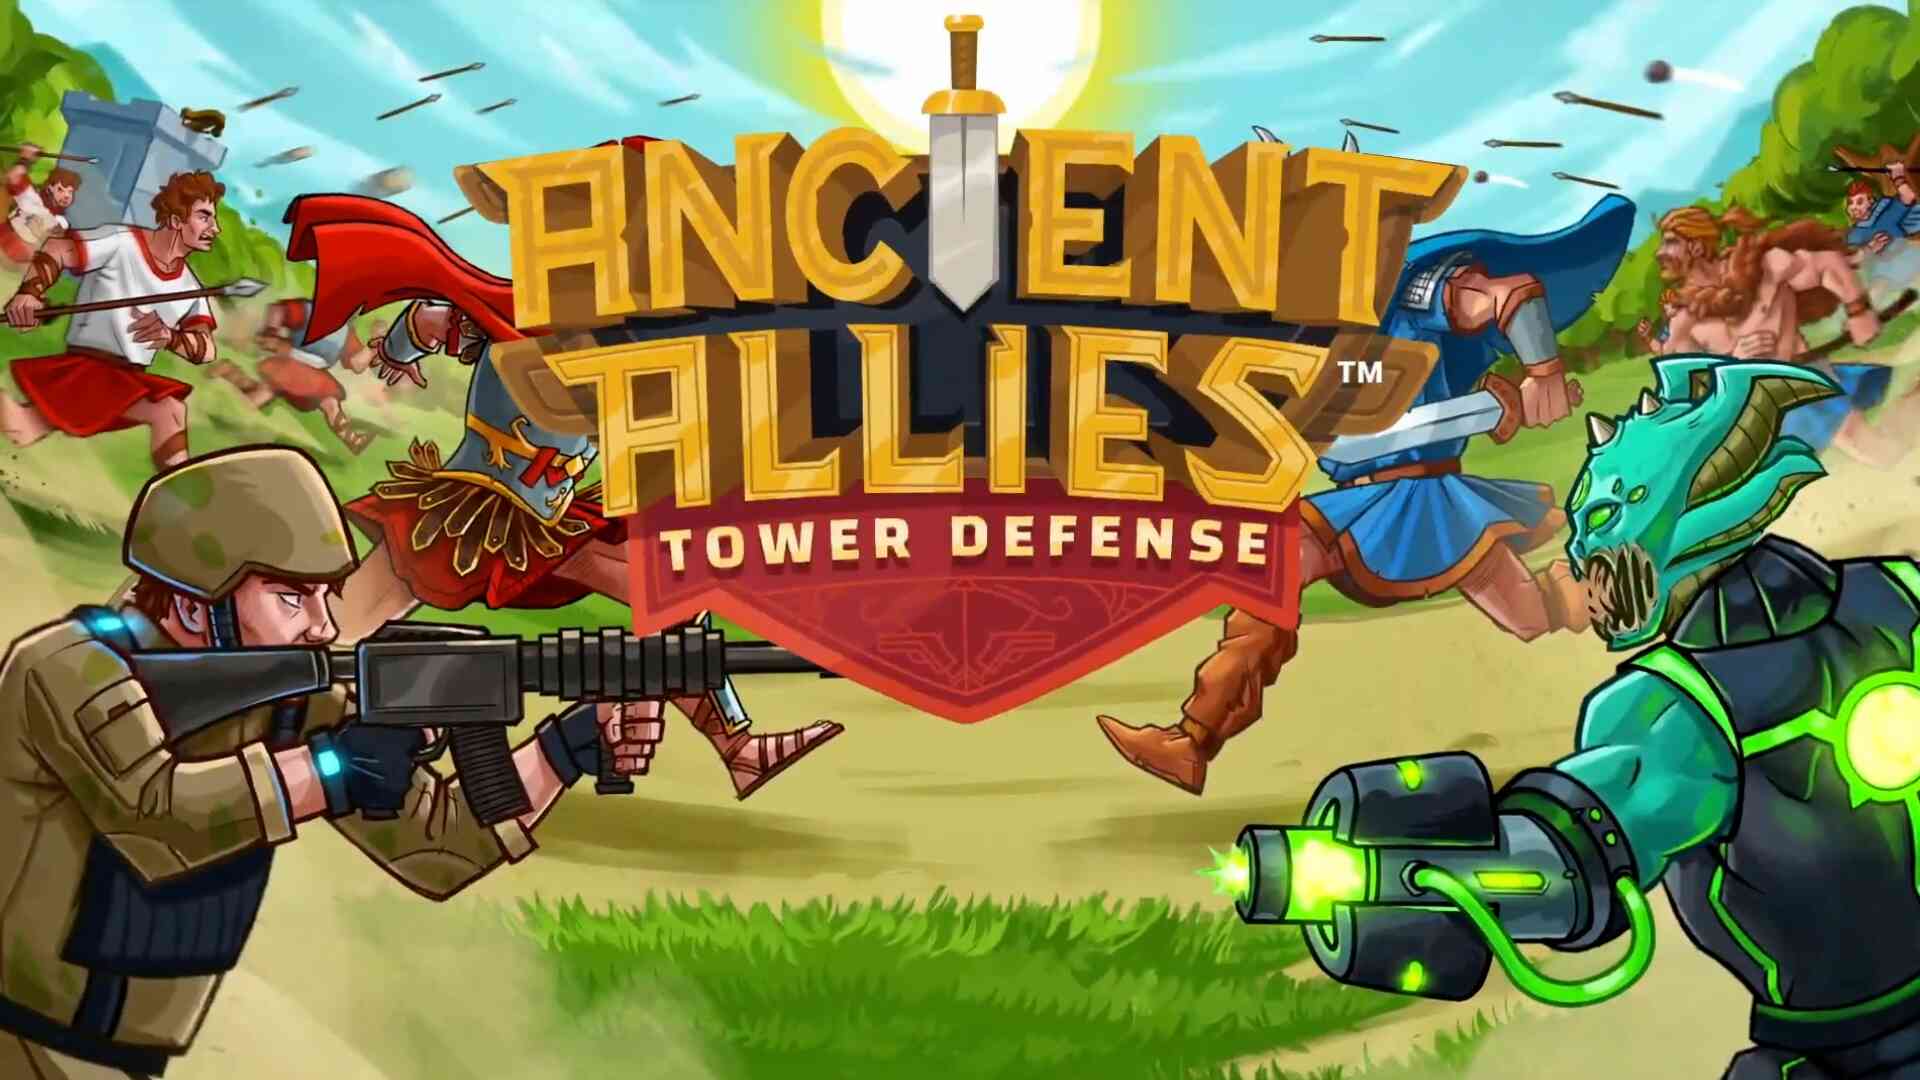 Vana's Quest: Tower Defense